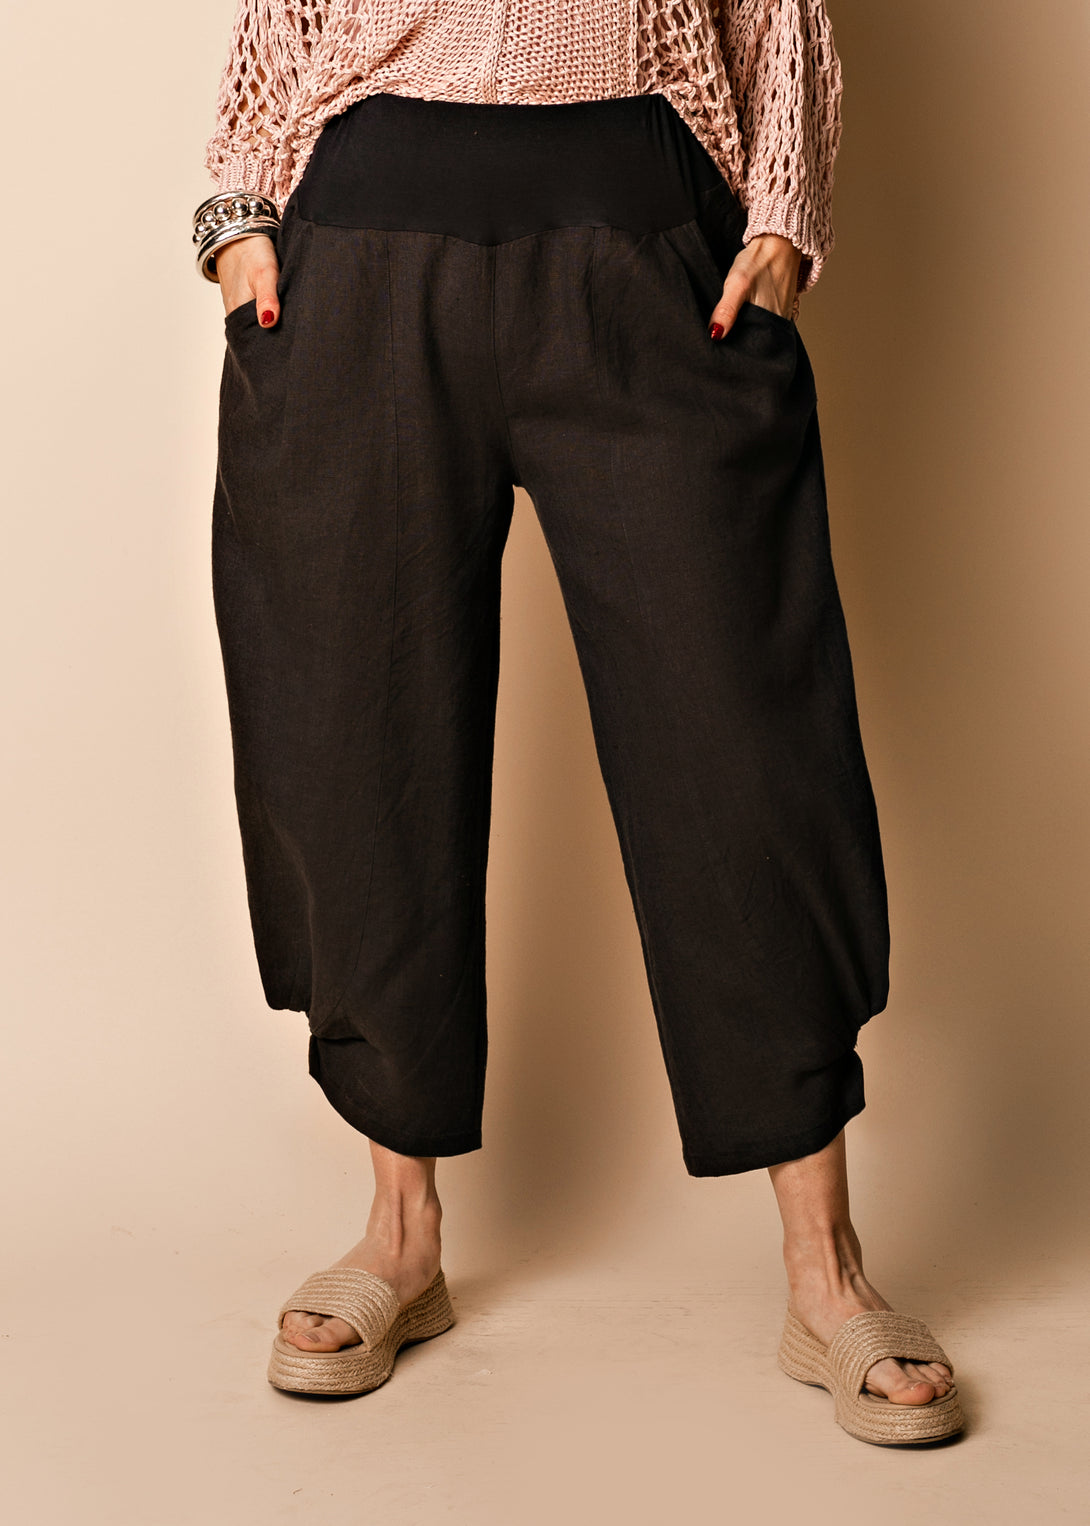 Amaka Linen Pants Full Length in Onyx - Imagine Fashion